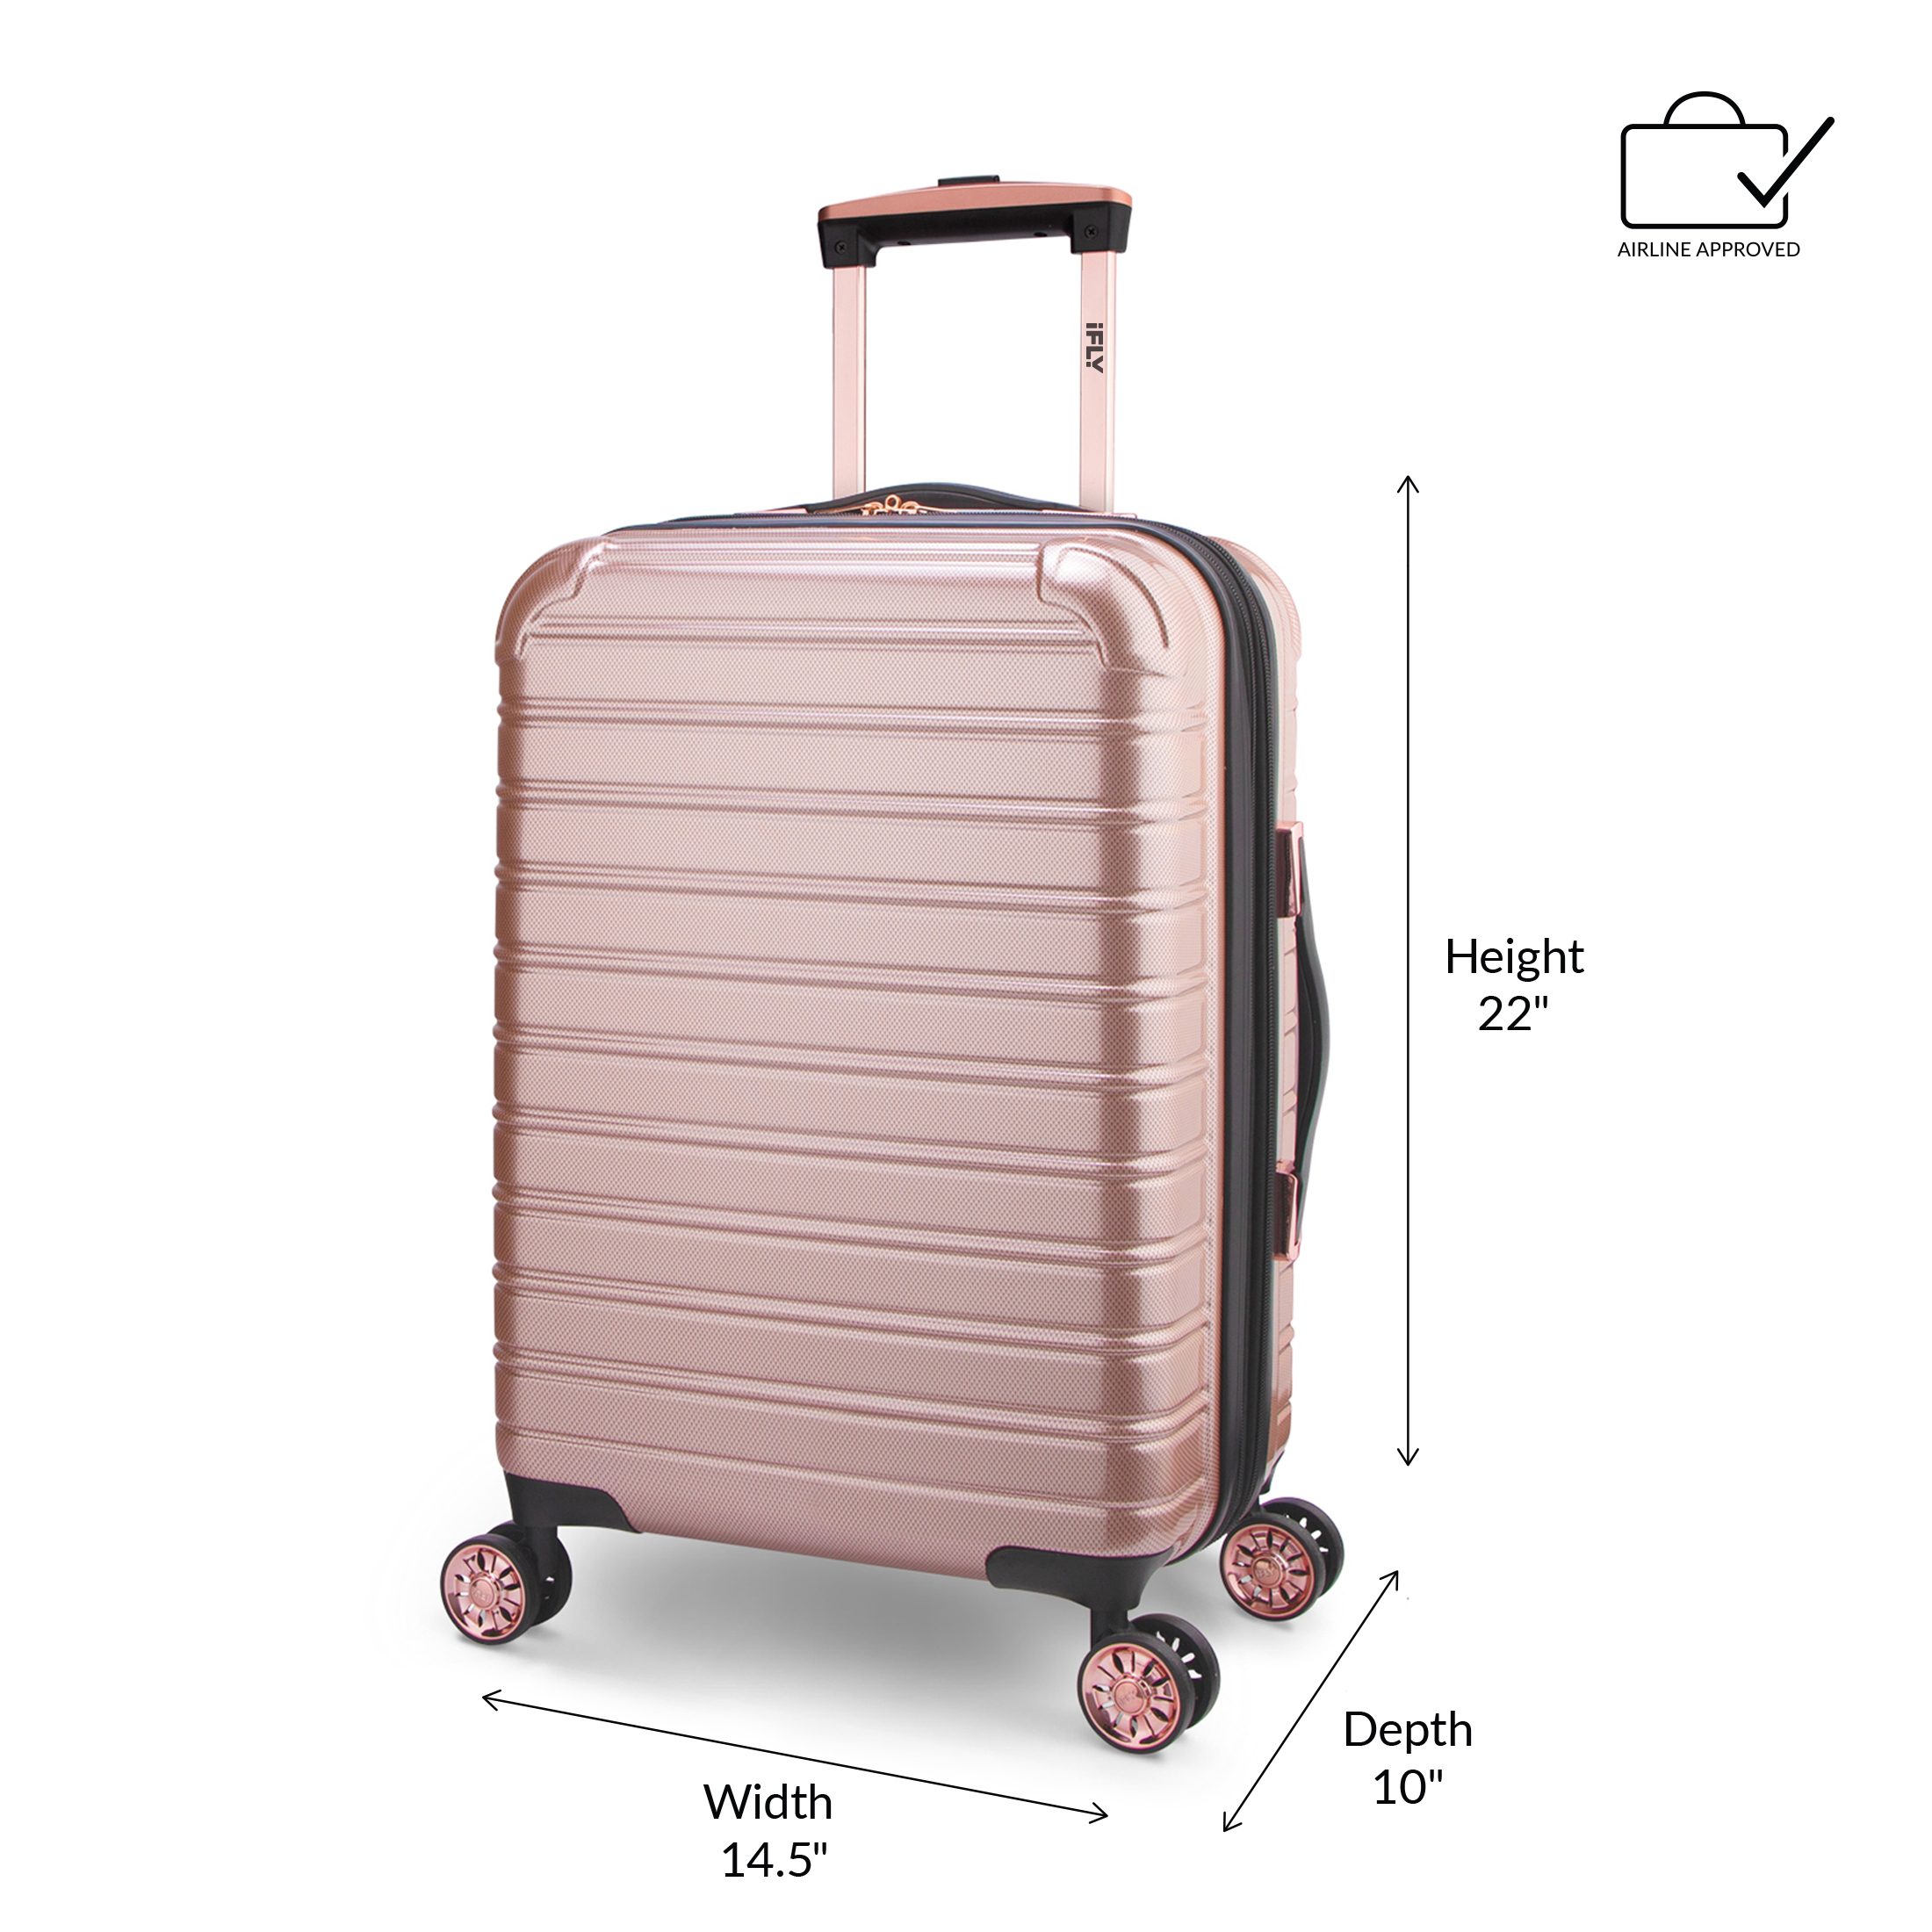 iFLY Hardside Luggage Fibertech 3 Piece Set, 20" Carry-on Luggage, 24" Checked Luggage and 28" Checked Luggage, Rose Gold - image 2 of 12